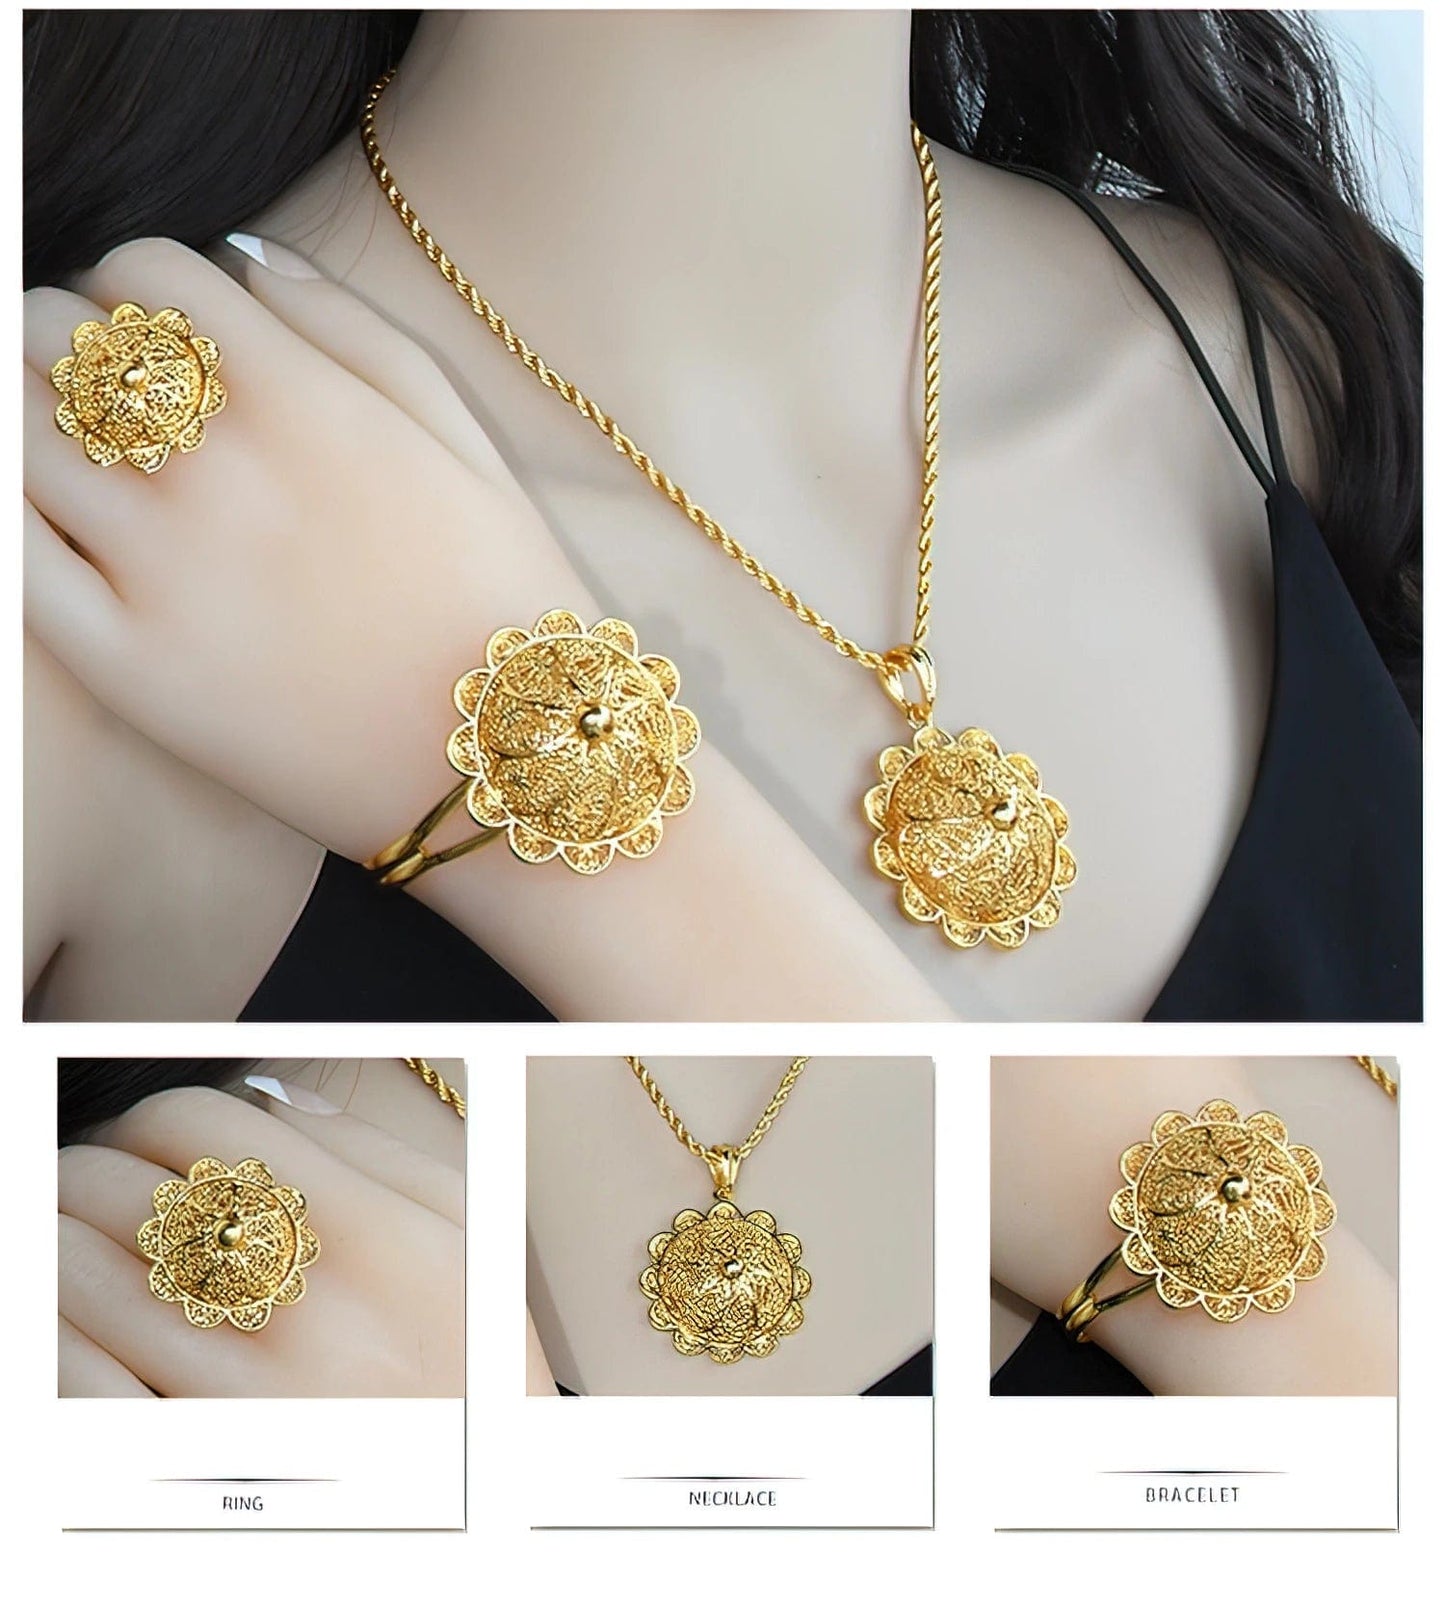 24K Gold Plated Habesha Bridal Jewelry Sets